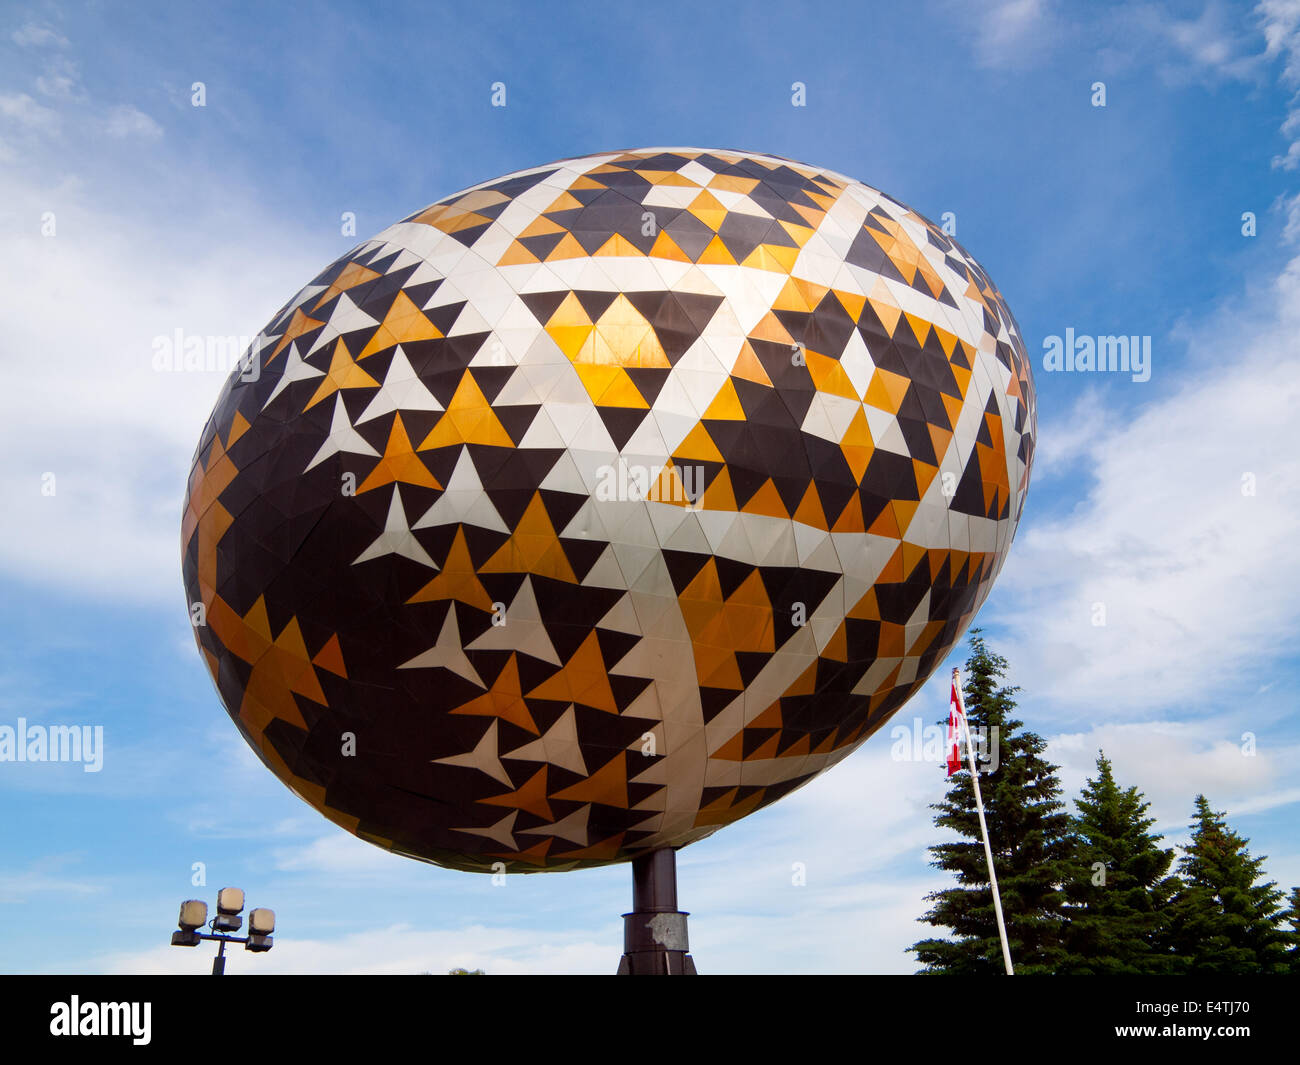 The Vegreville Egg, a giant (world's largest) sculpture of a pysanka, a Ukrainian-style Easter egg. Vegreville, Alberta, Canada. Stock Photo